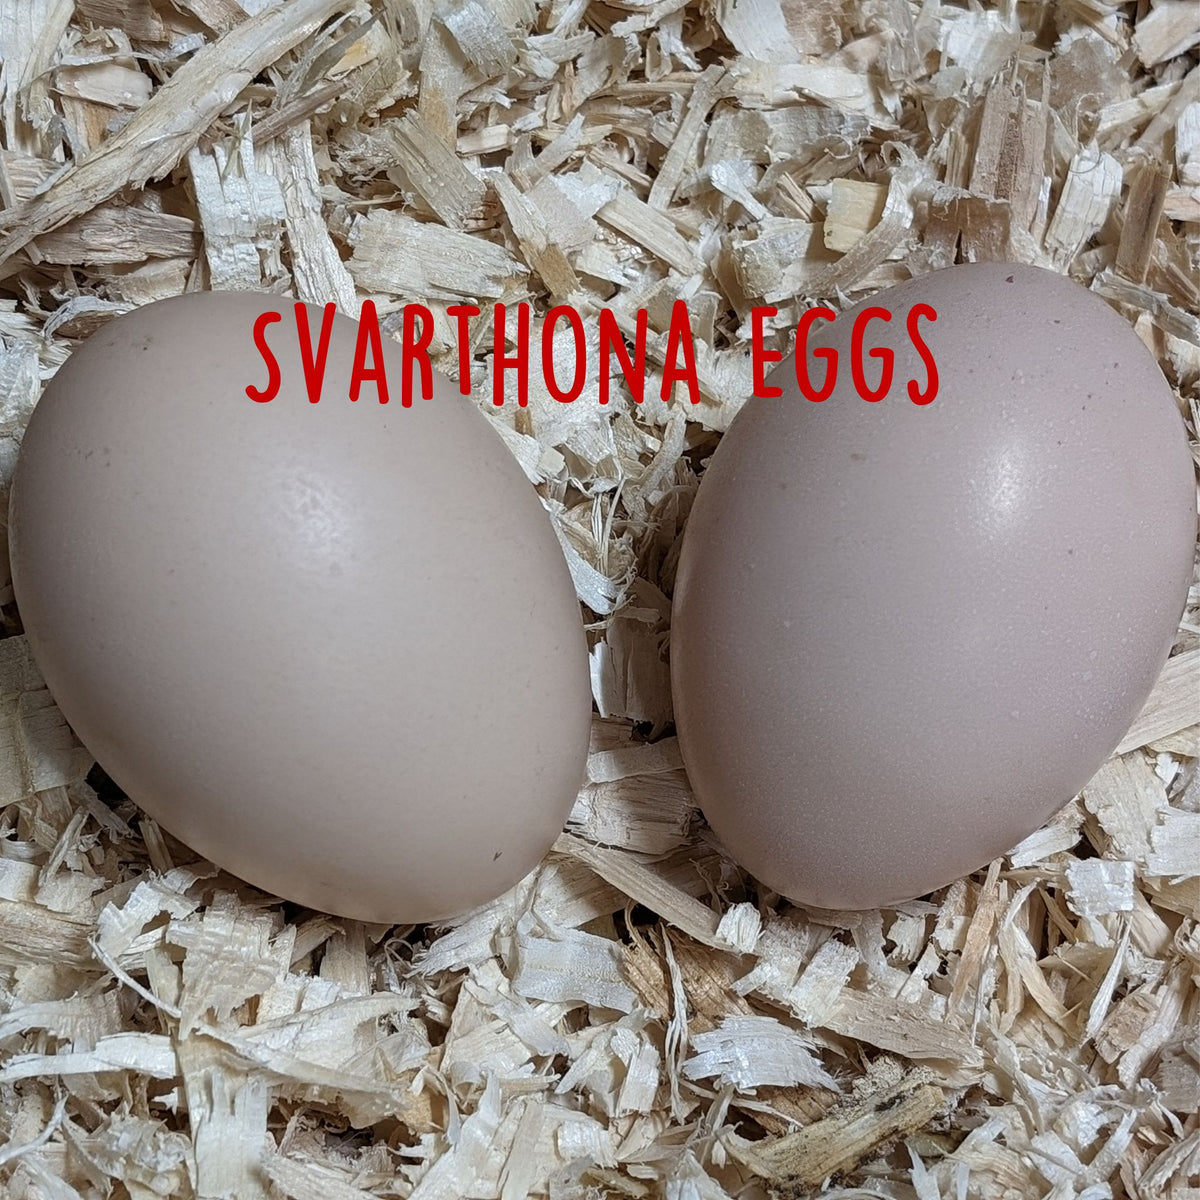 One Dozen Bohuslän-Dal Svarthöna Swedish Black Hen Hatching Eggs